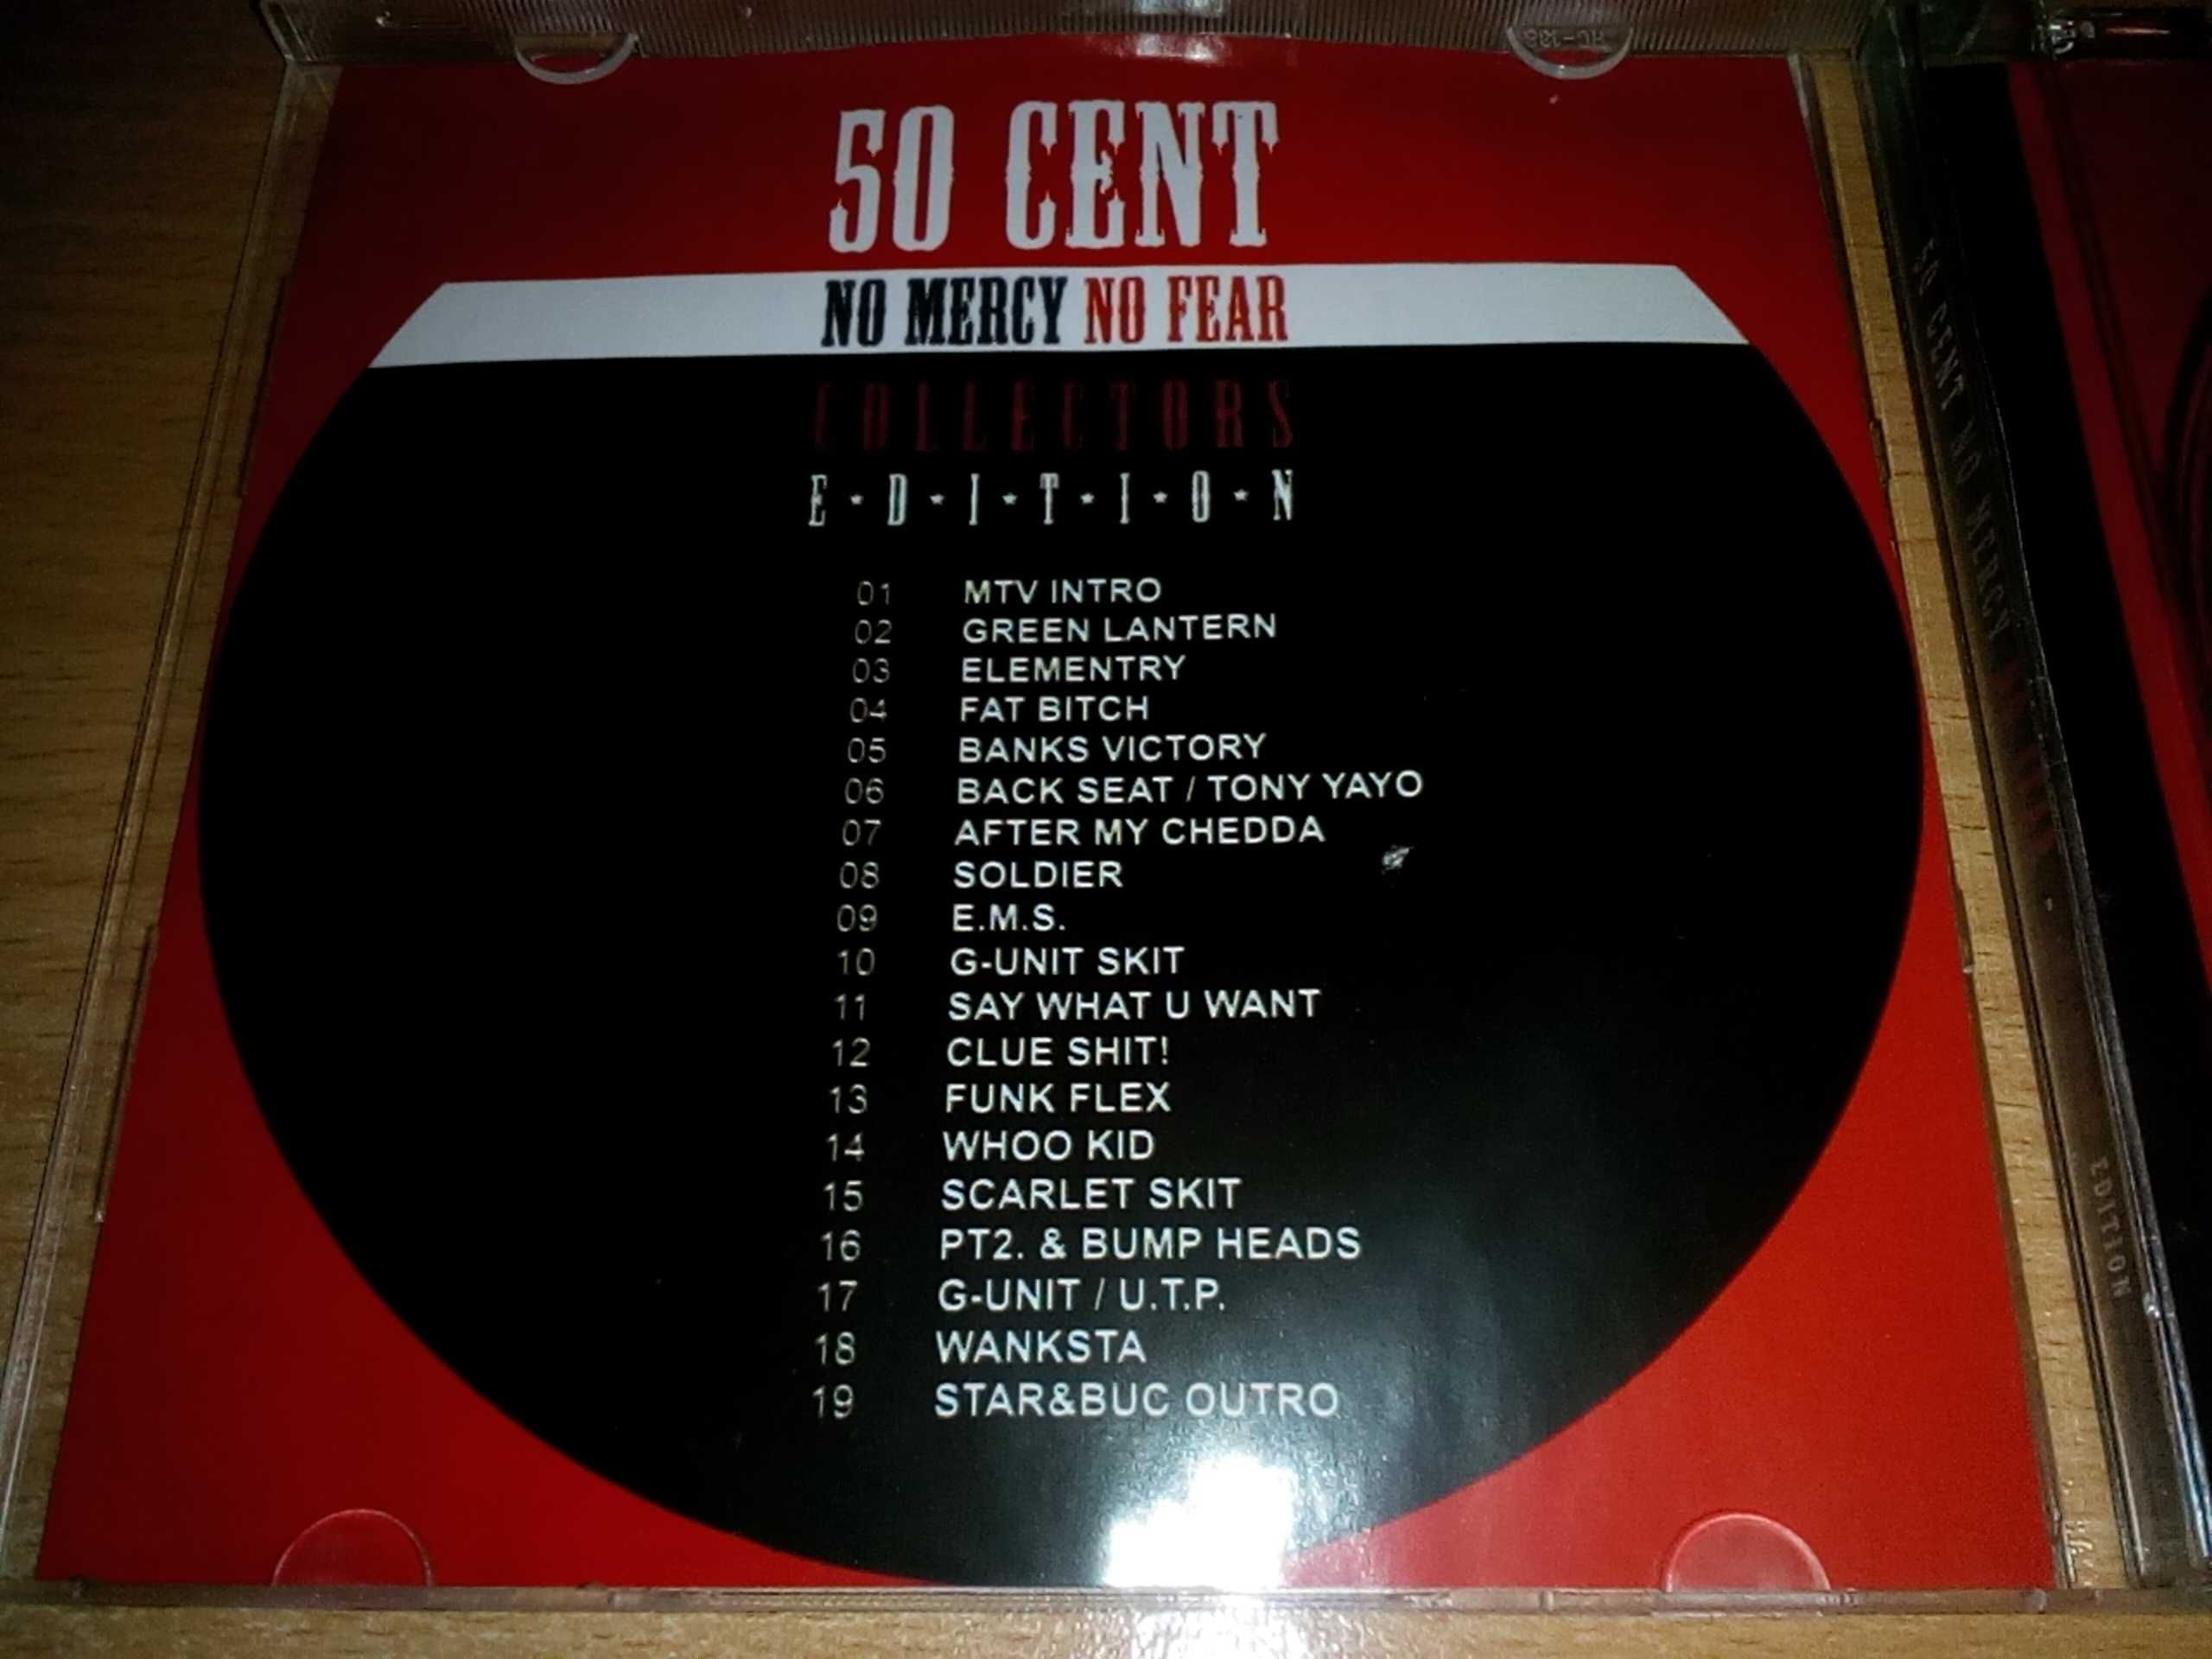 50 Cent - No mercy no fear